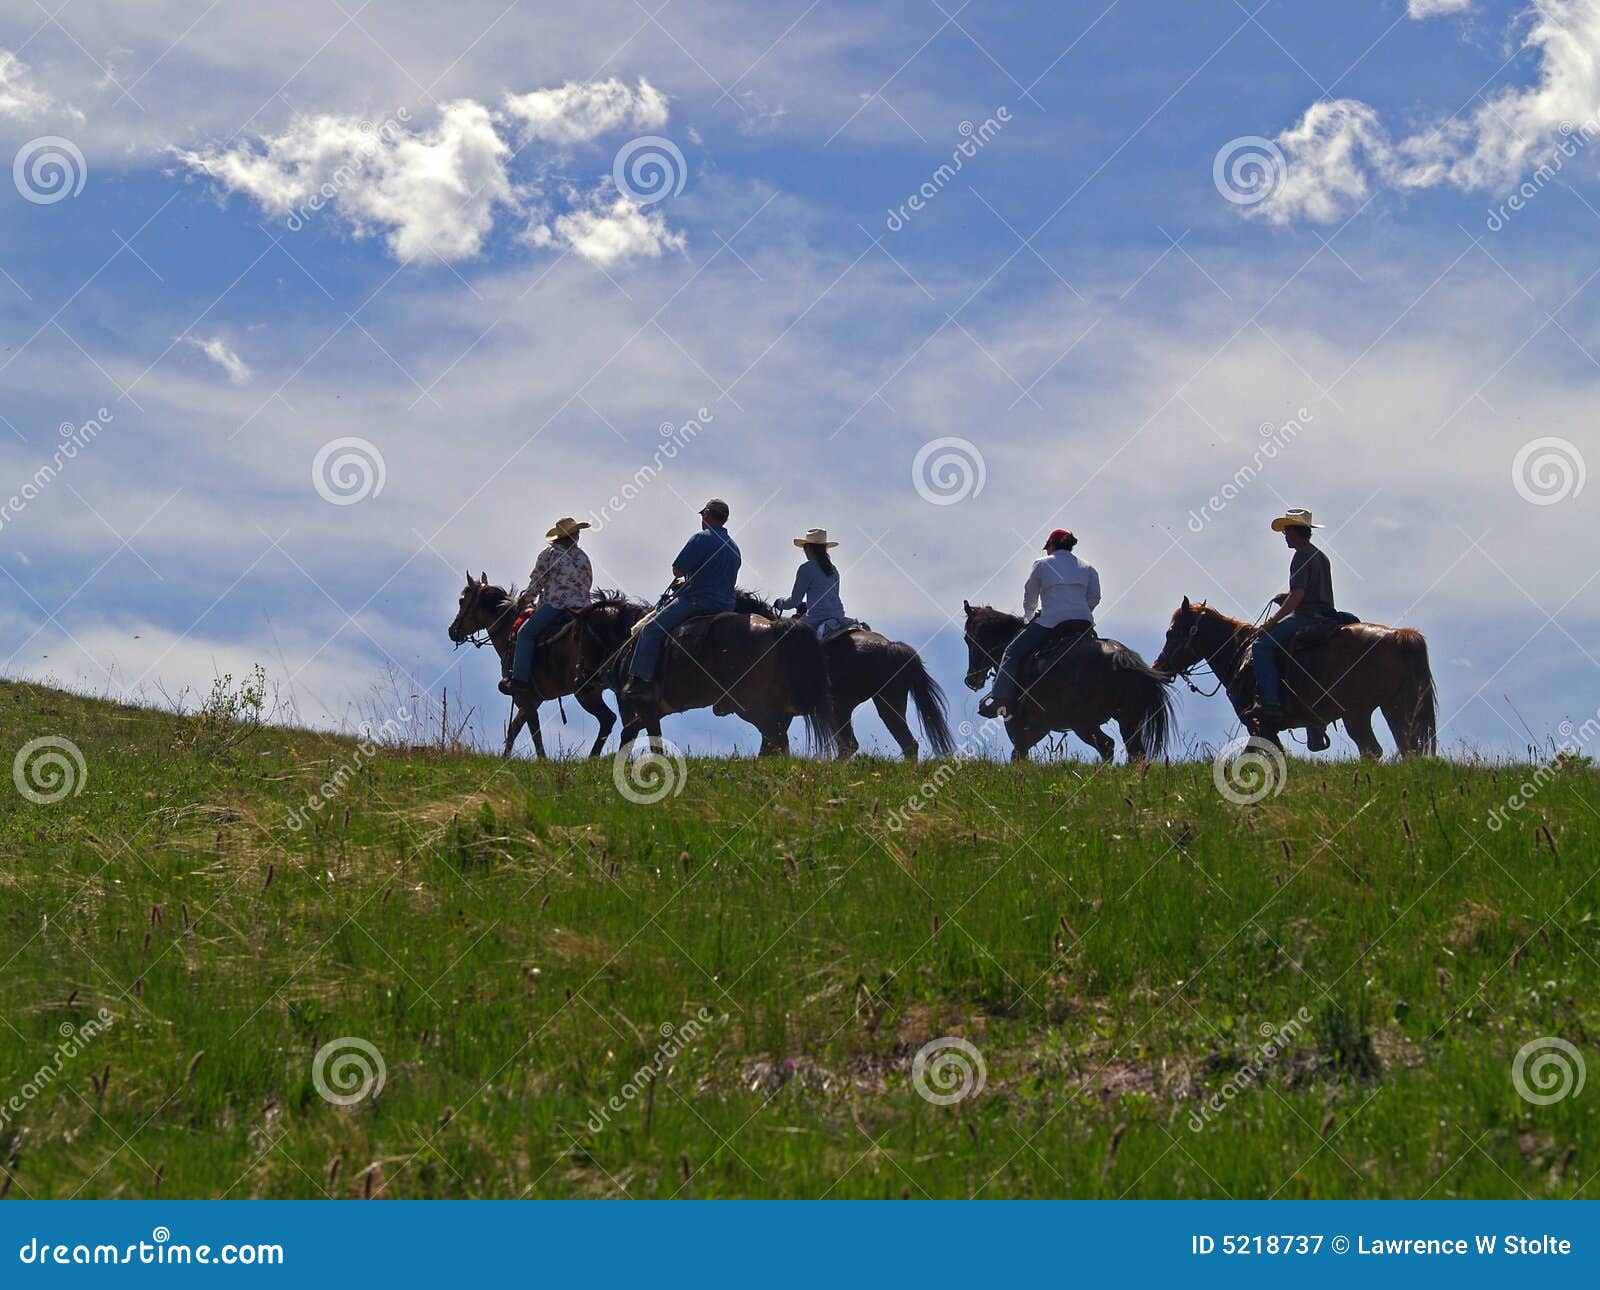 horses and riders on ridge